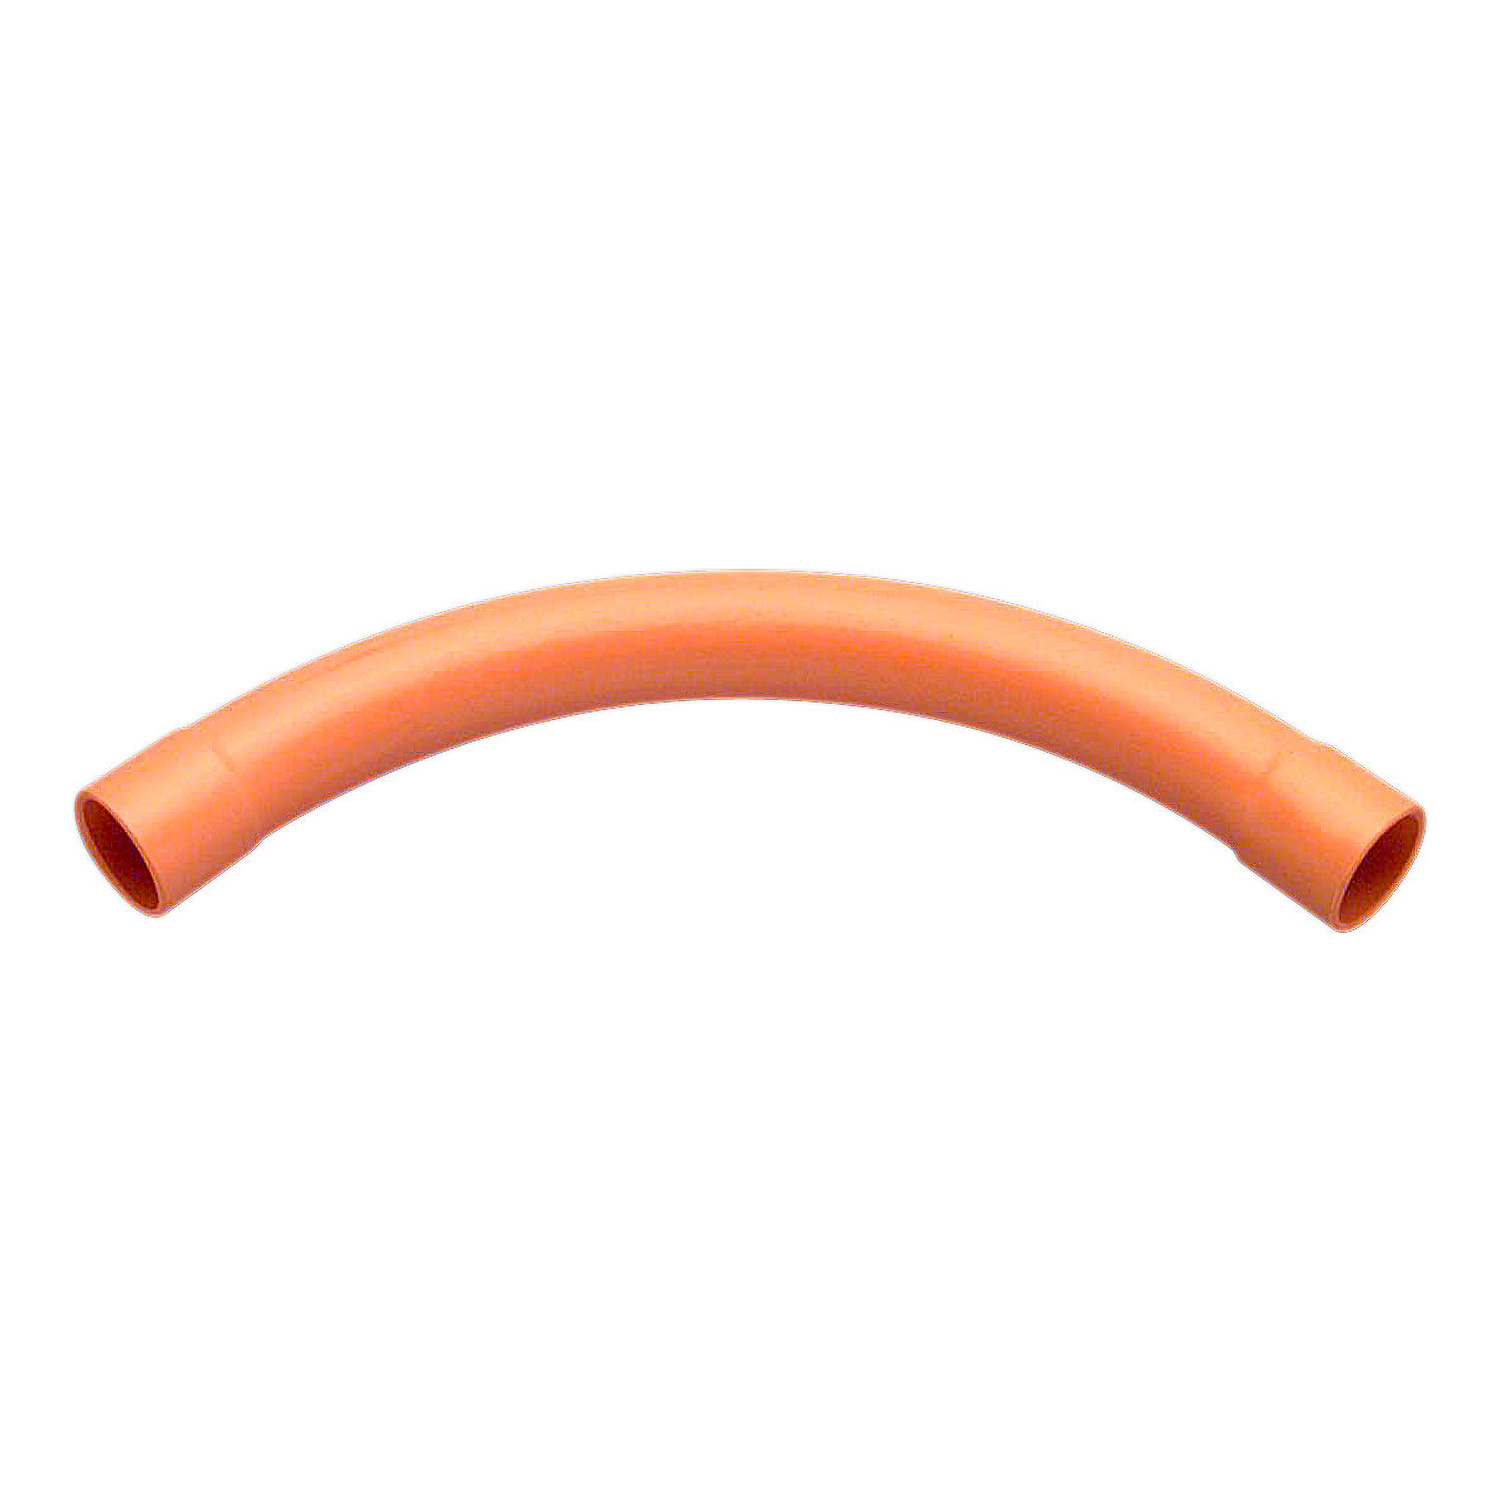 Solid Fittings - PVC, 90 Degree Heavy Duty Sweep Bends, 25mm, Orange